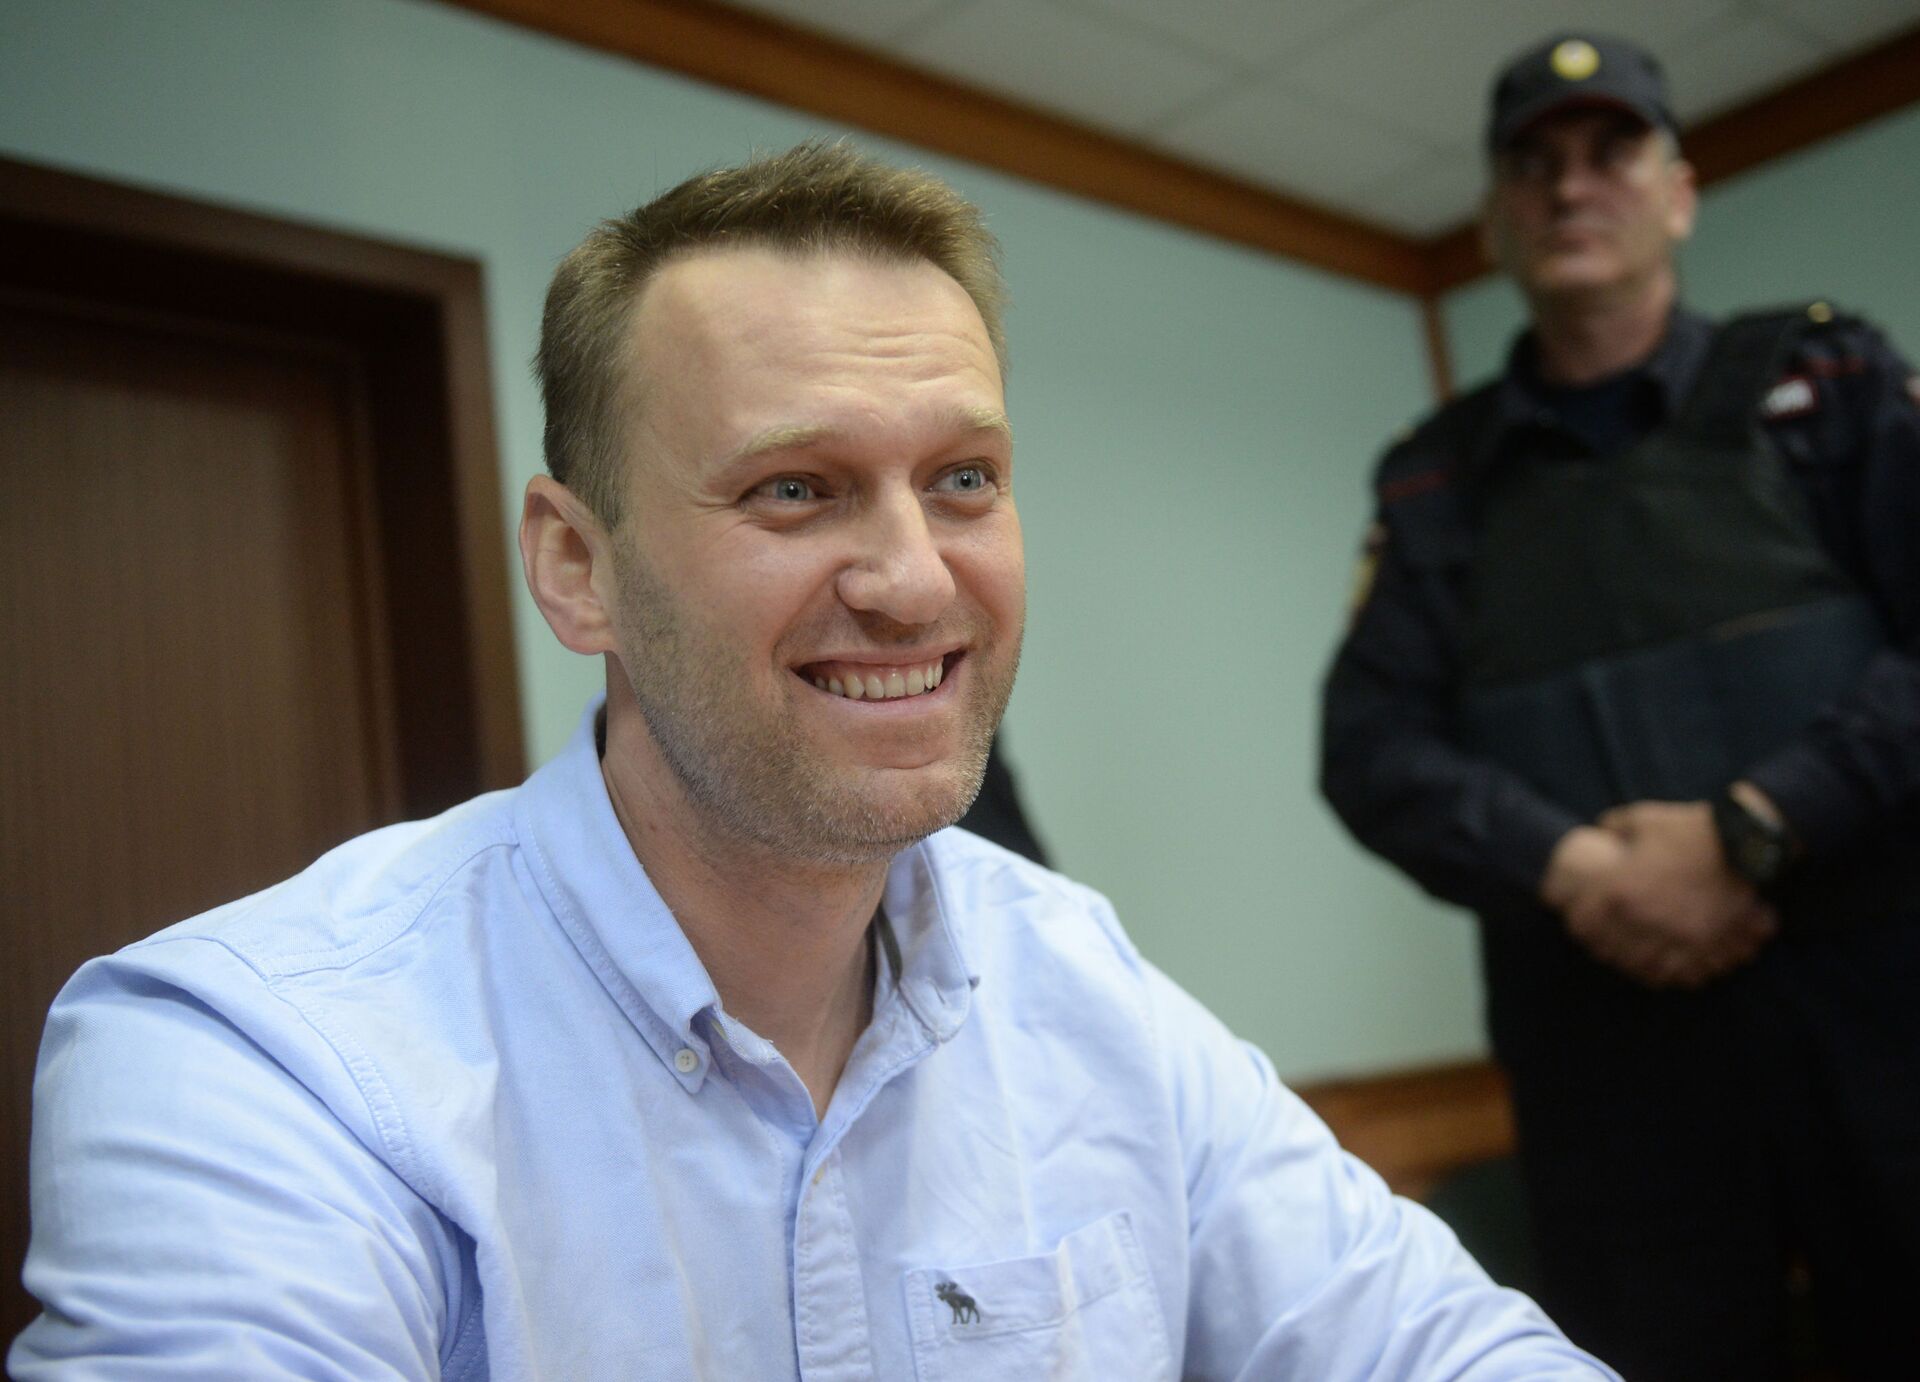 Pedido para libertar Navalny é impraticável, diz ministro da Justiça da Rússia - Sputnik Brasil, 1920, 17.02.2021